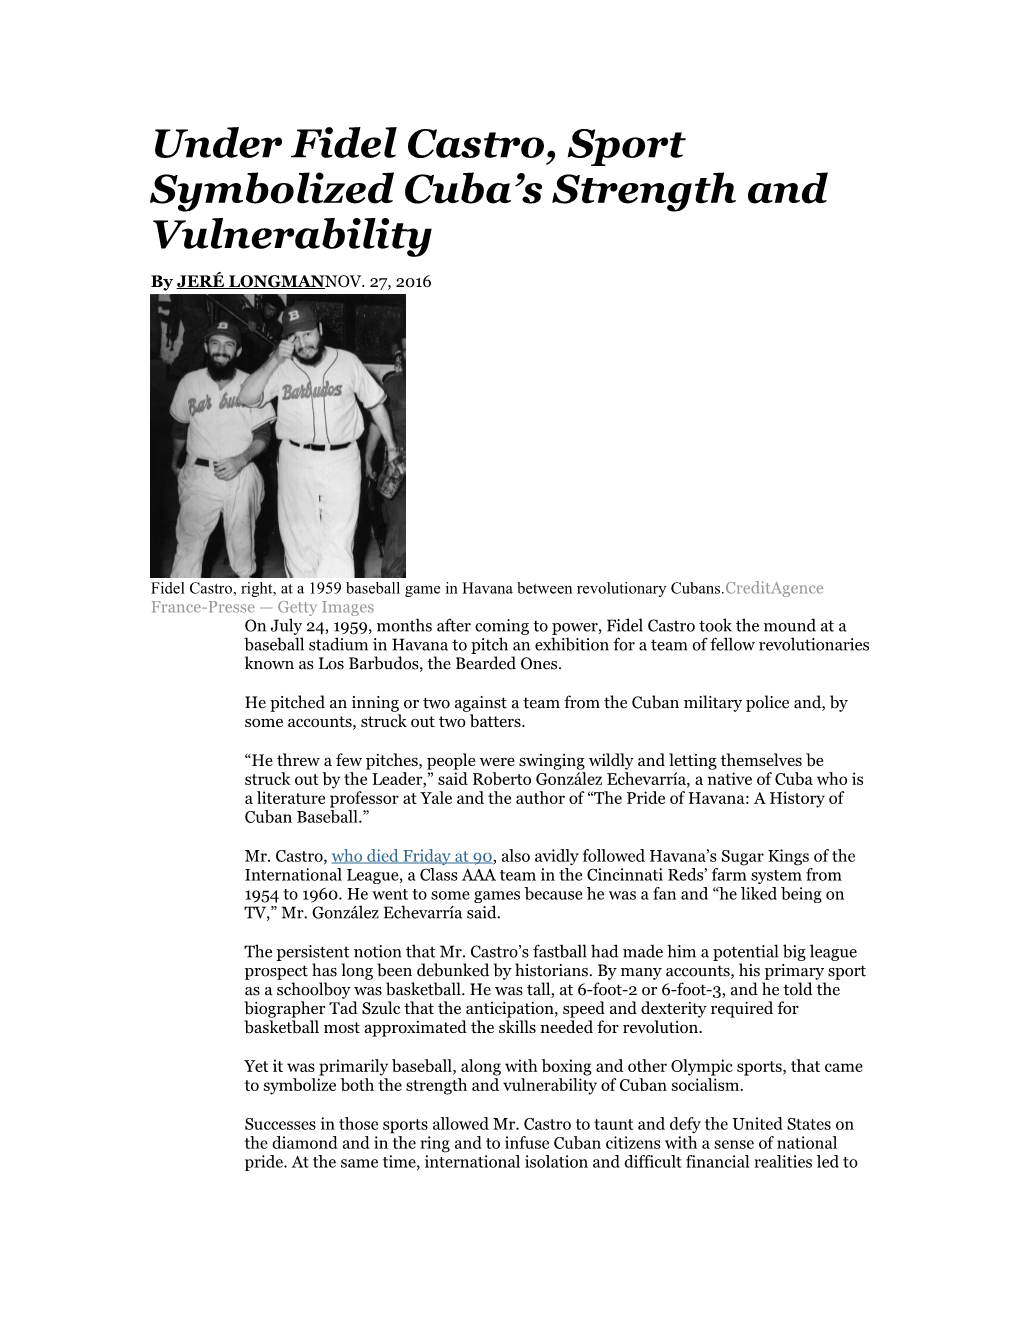 Under Fidel Castro, Sport Symbolized Cuba S Strength and Vulnerability